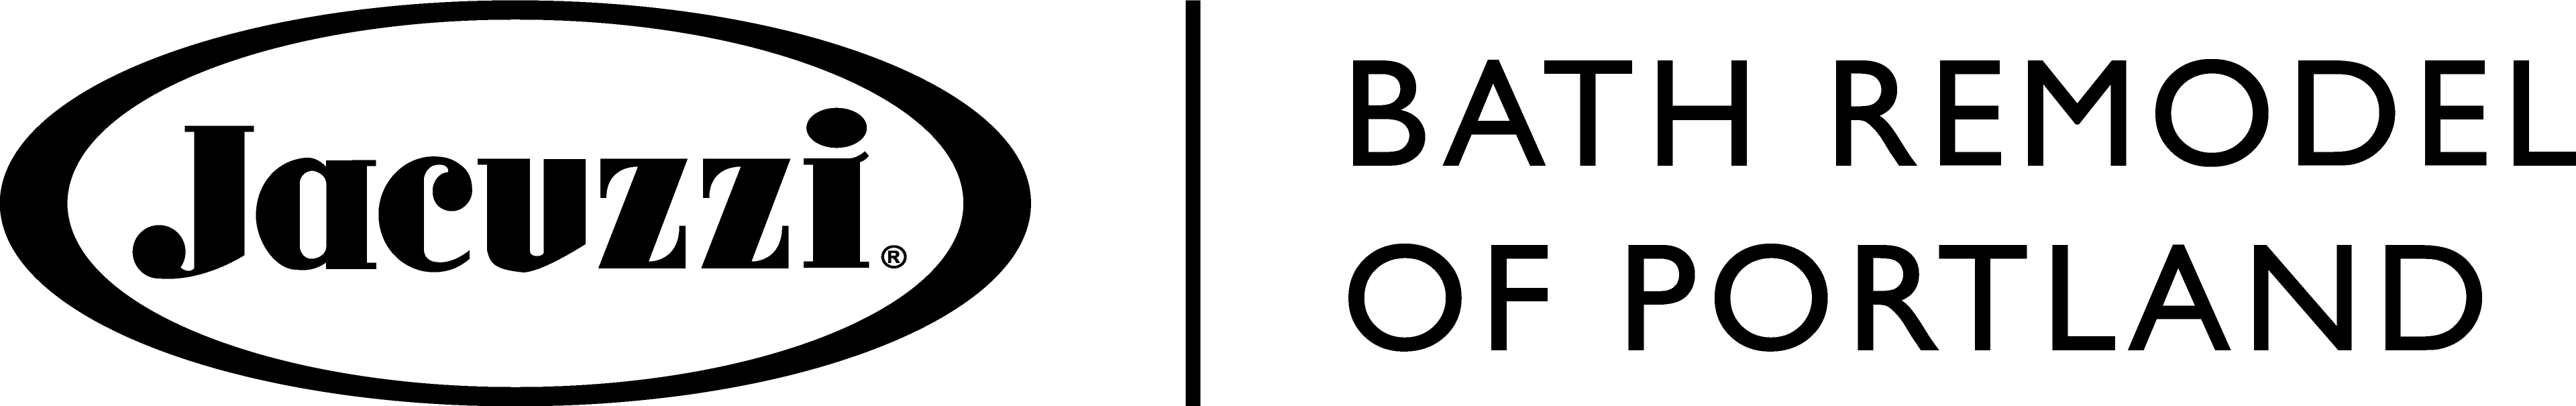 JBRx_Portland_Horizontal_Stack_Logo_Black